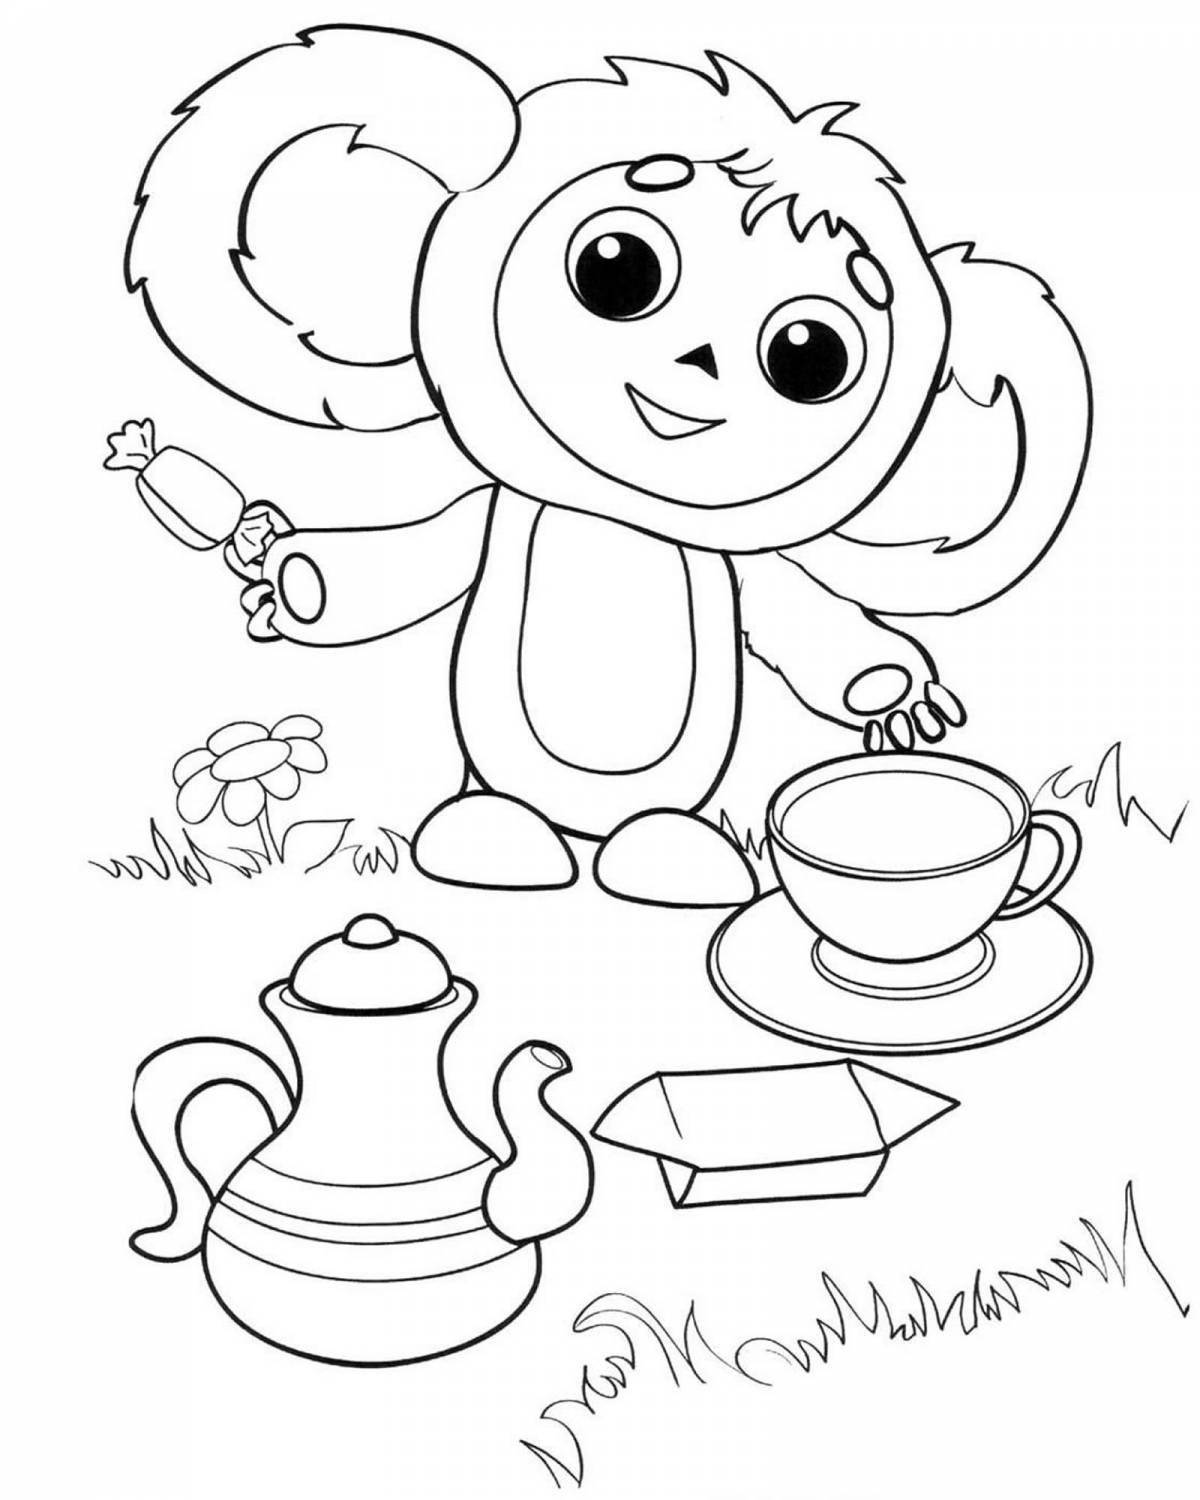 Adorable Cheburashka coloring book for kids